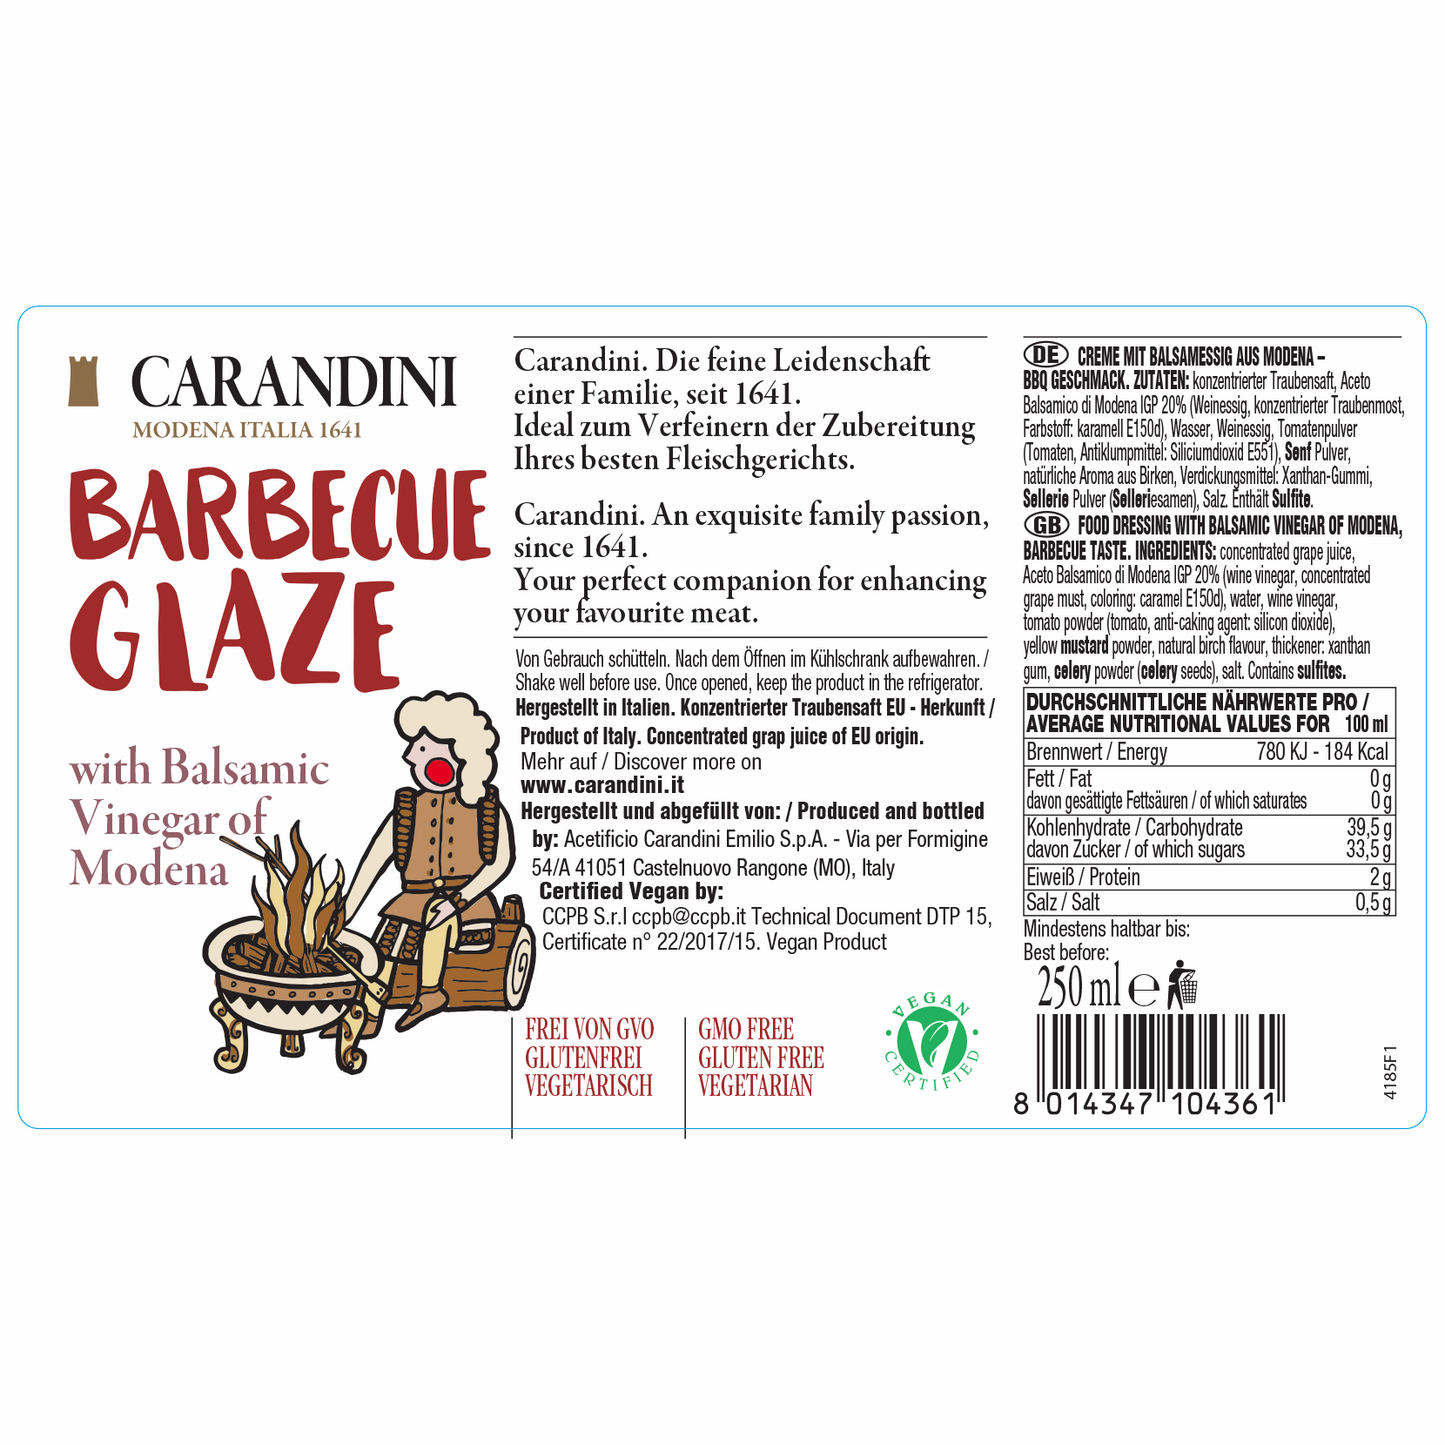 Barbecue Glaze with Balsamic Vinegar of Modena